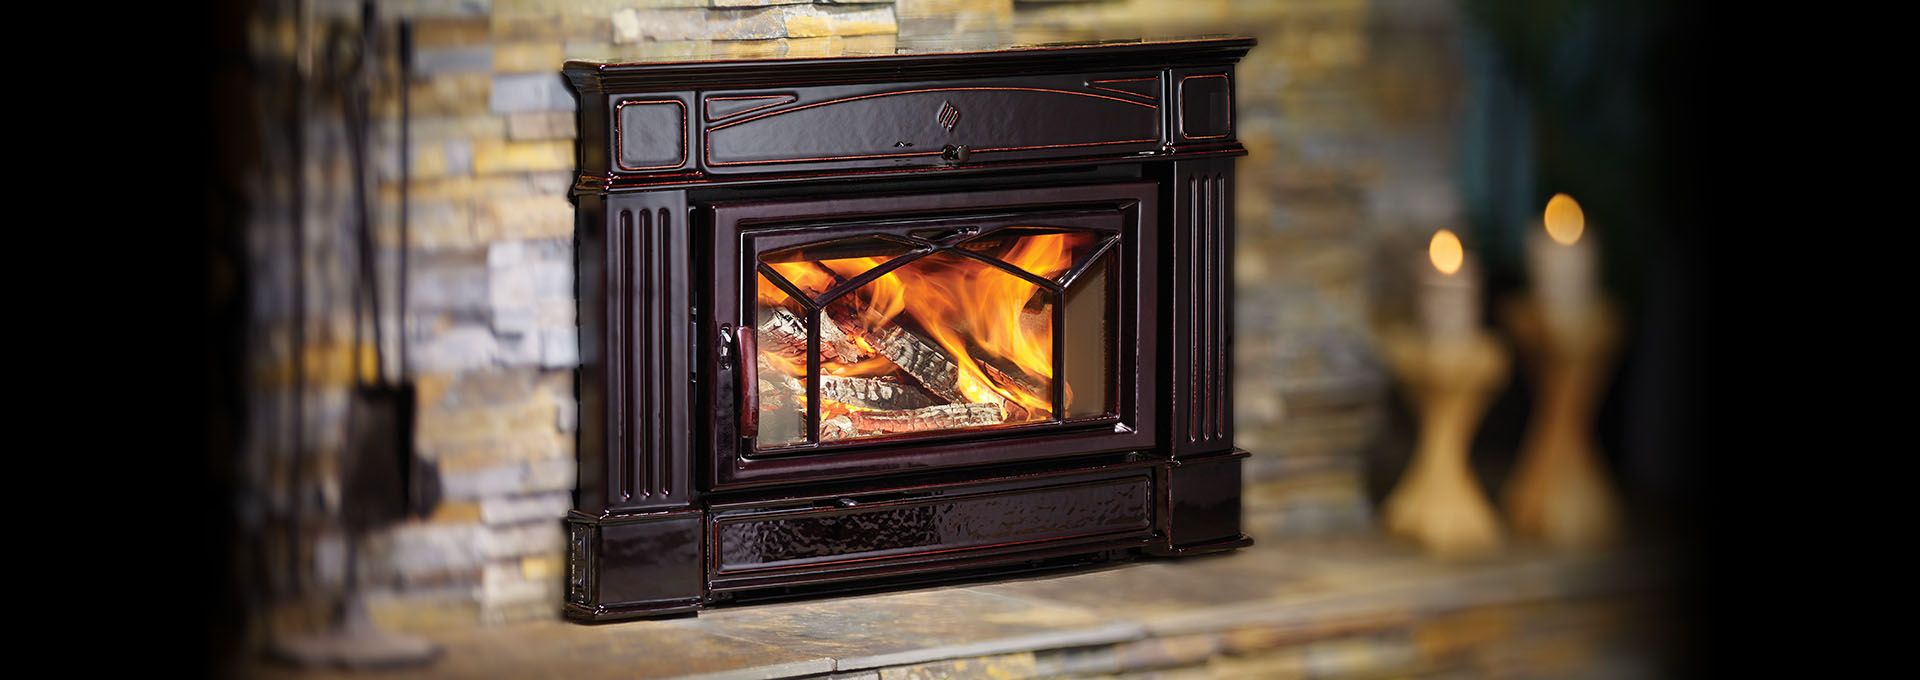 Classic Flame Electric Fireplace Manual Fresh Wood Inserts Epa Certified